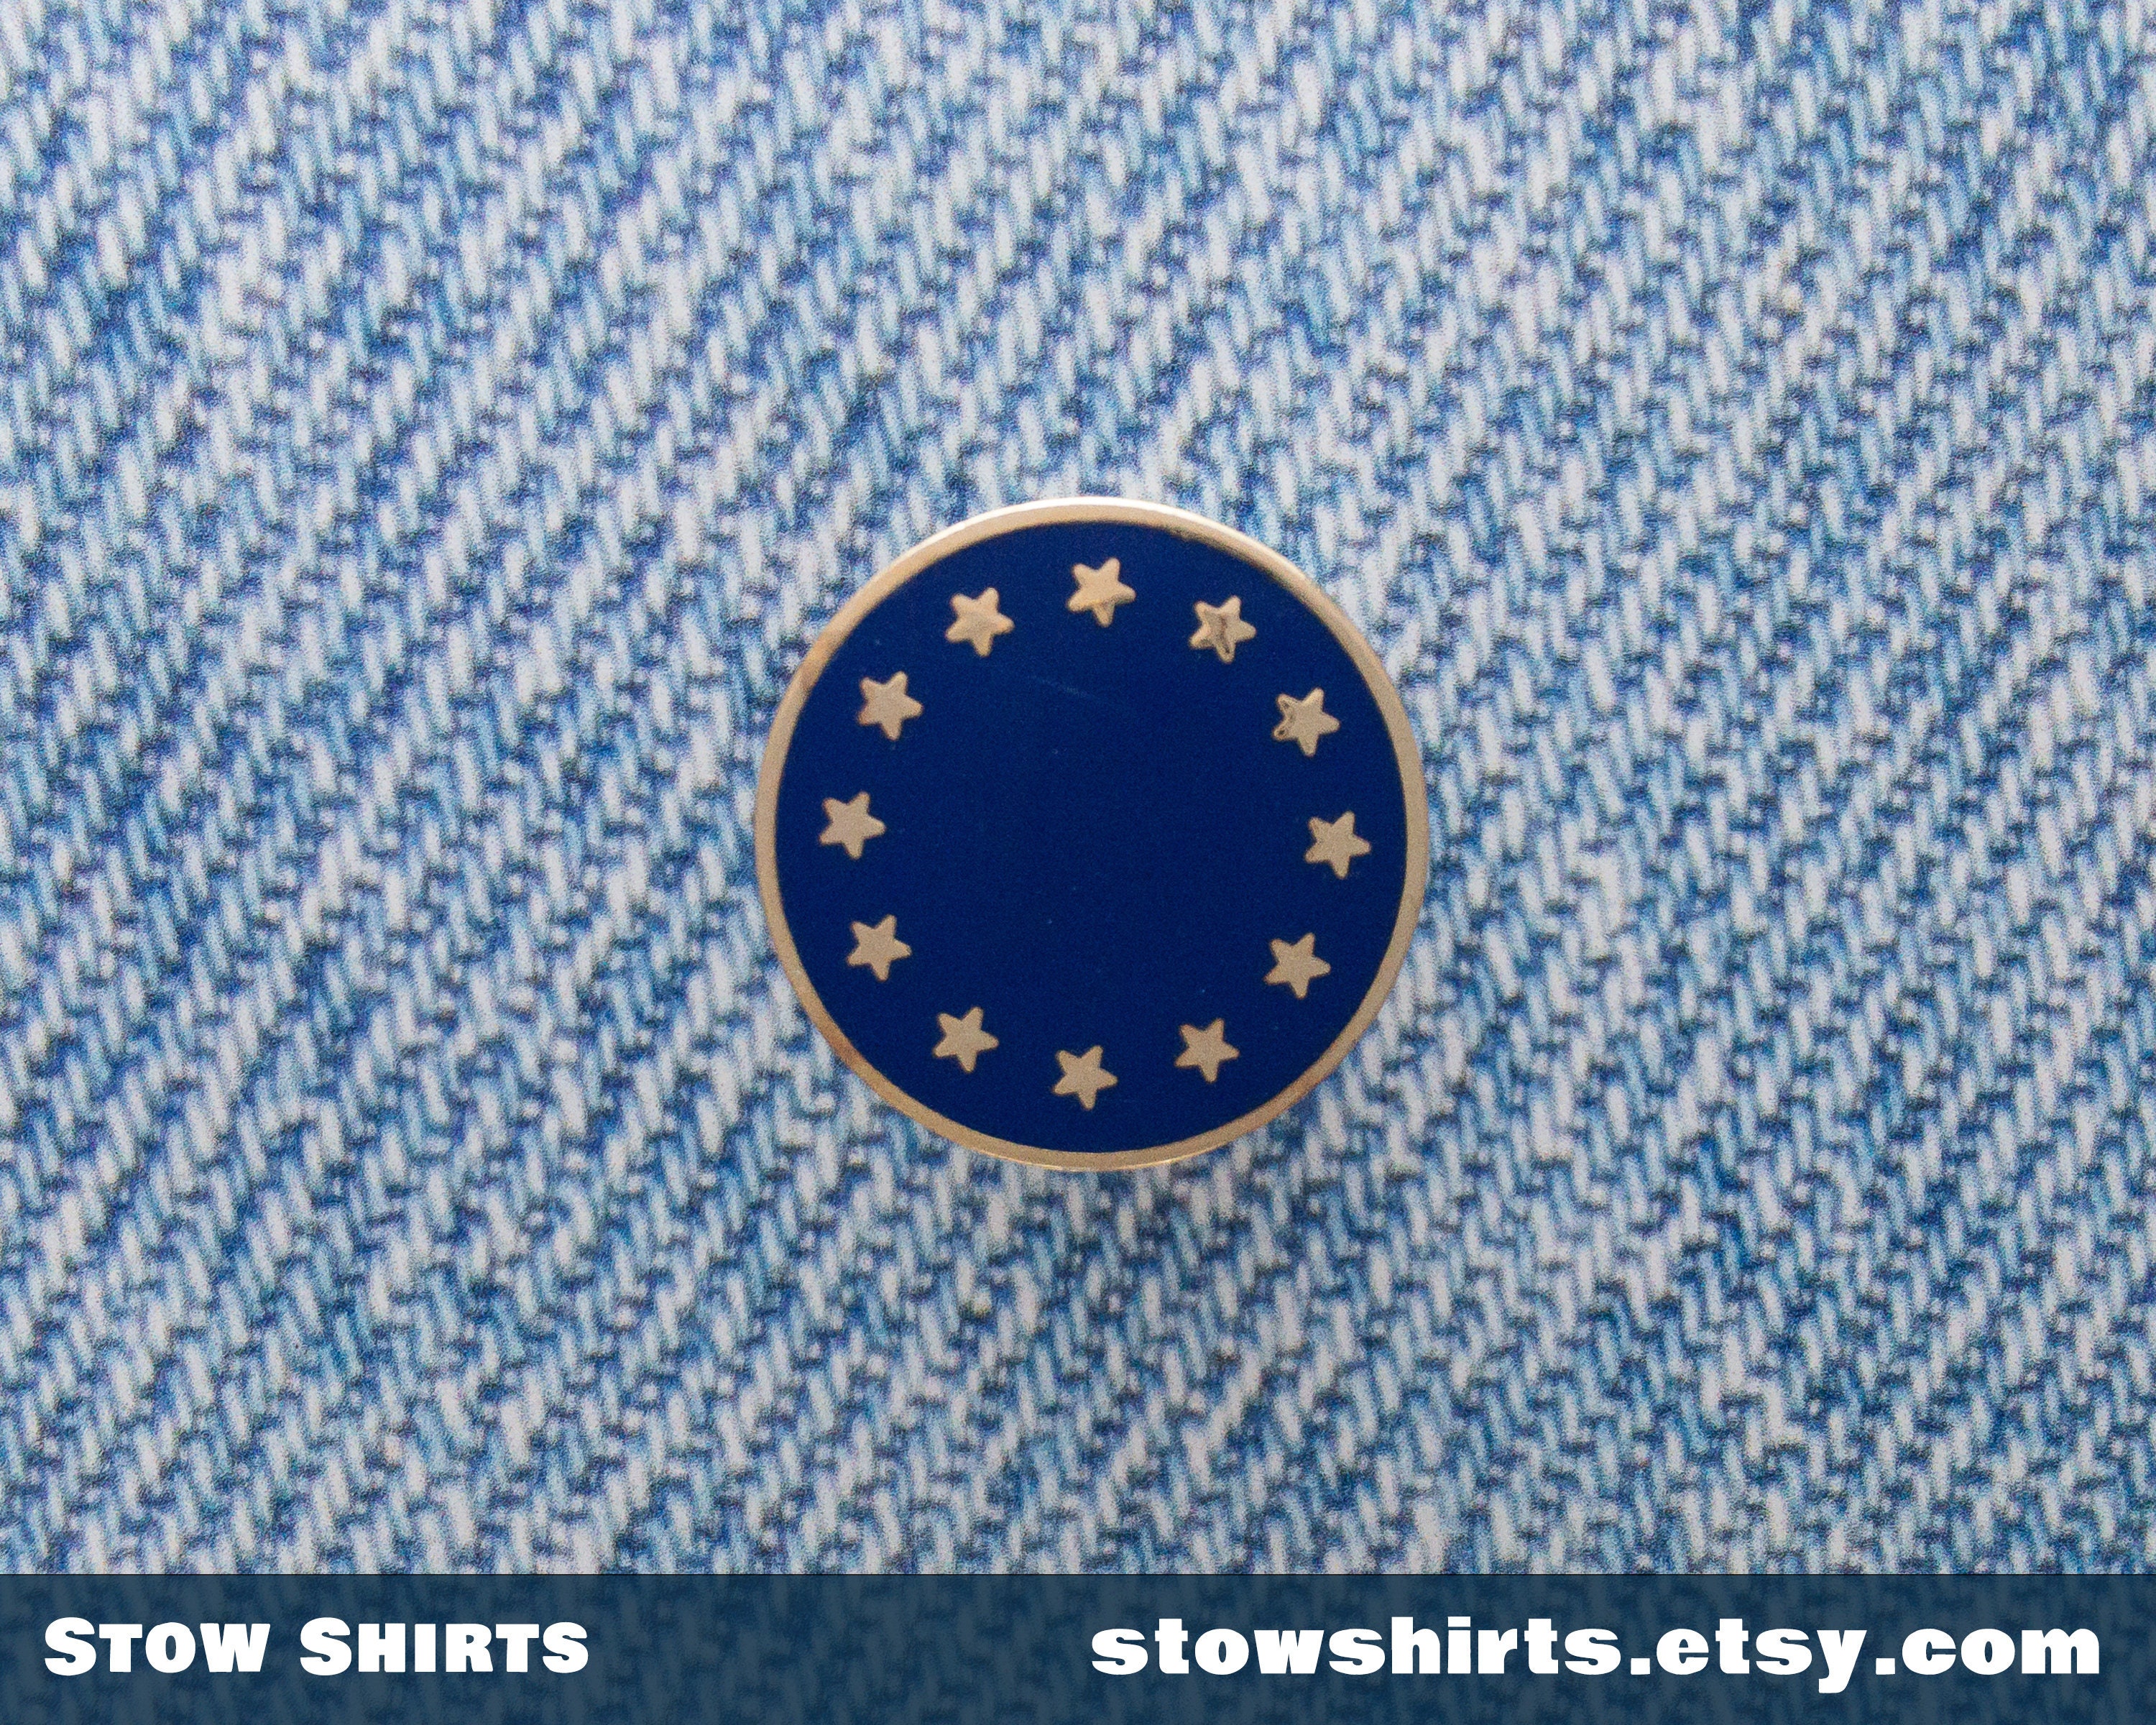 Metall Emaille Anstecker Brosche Flagge Eu Europäische Union Eec Nationalflagge 